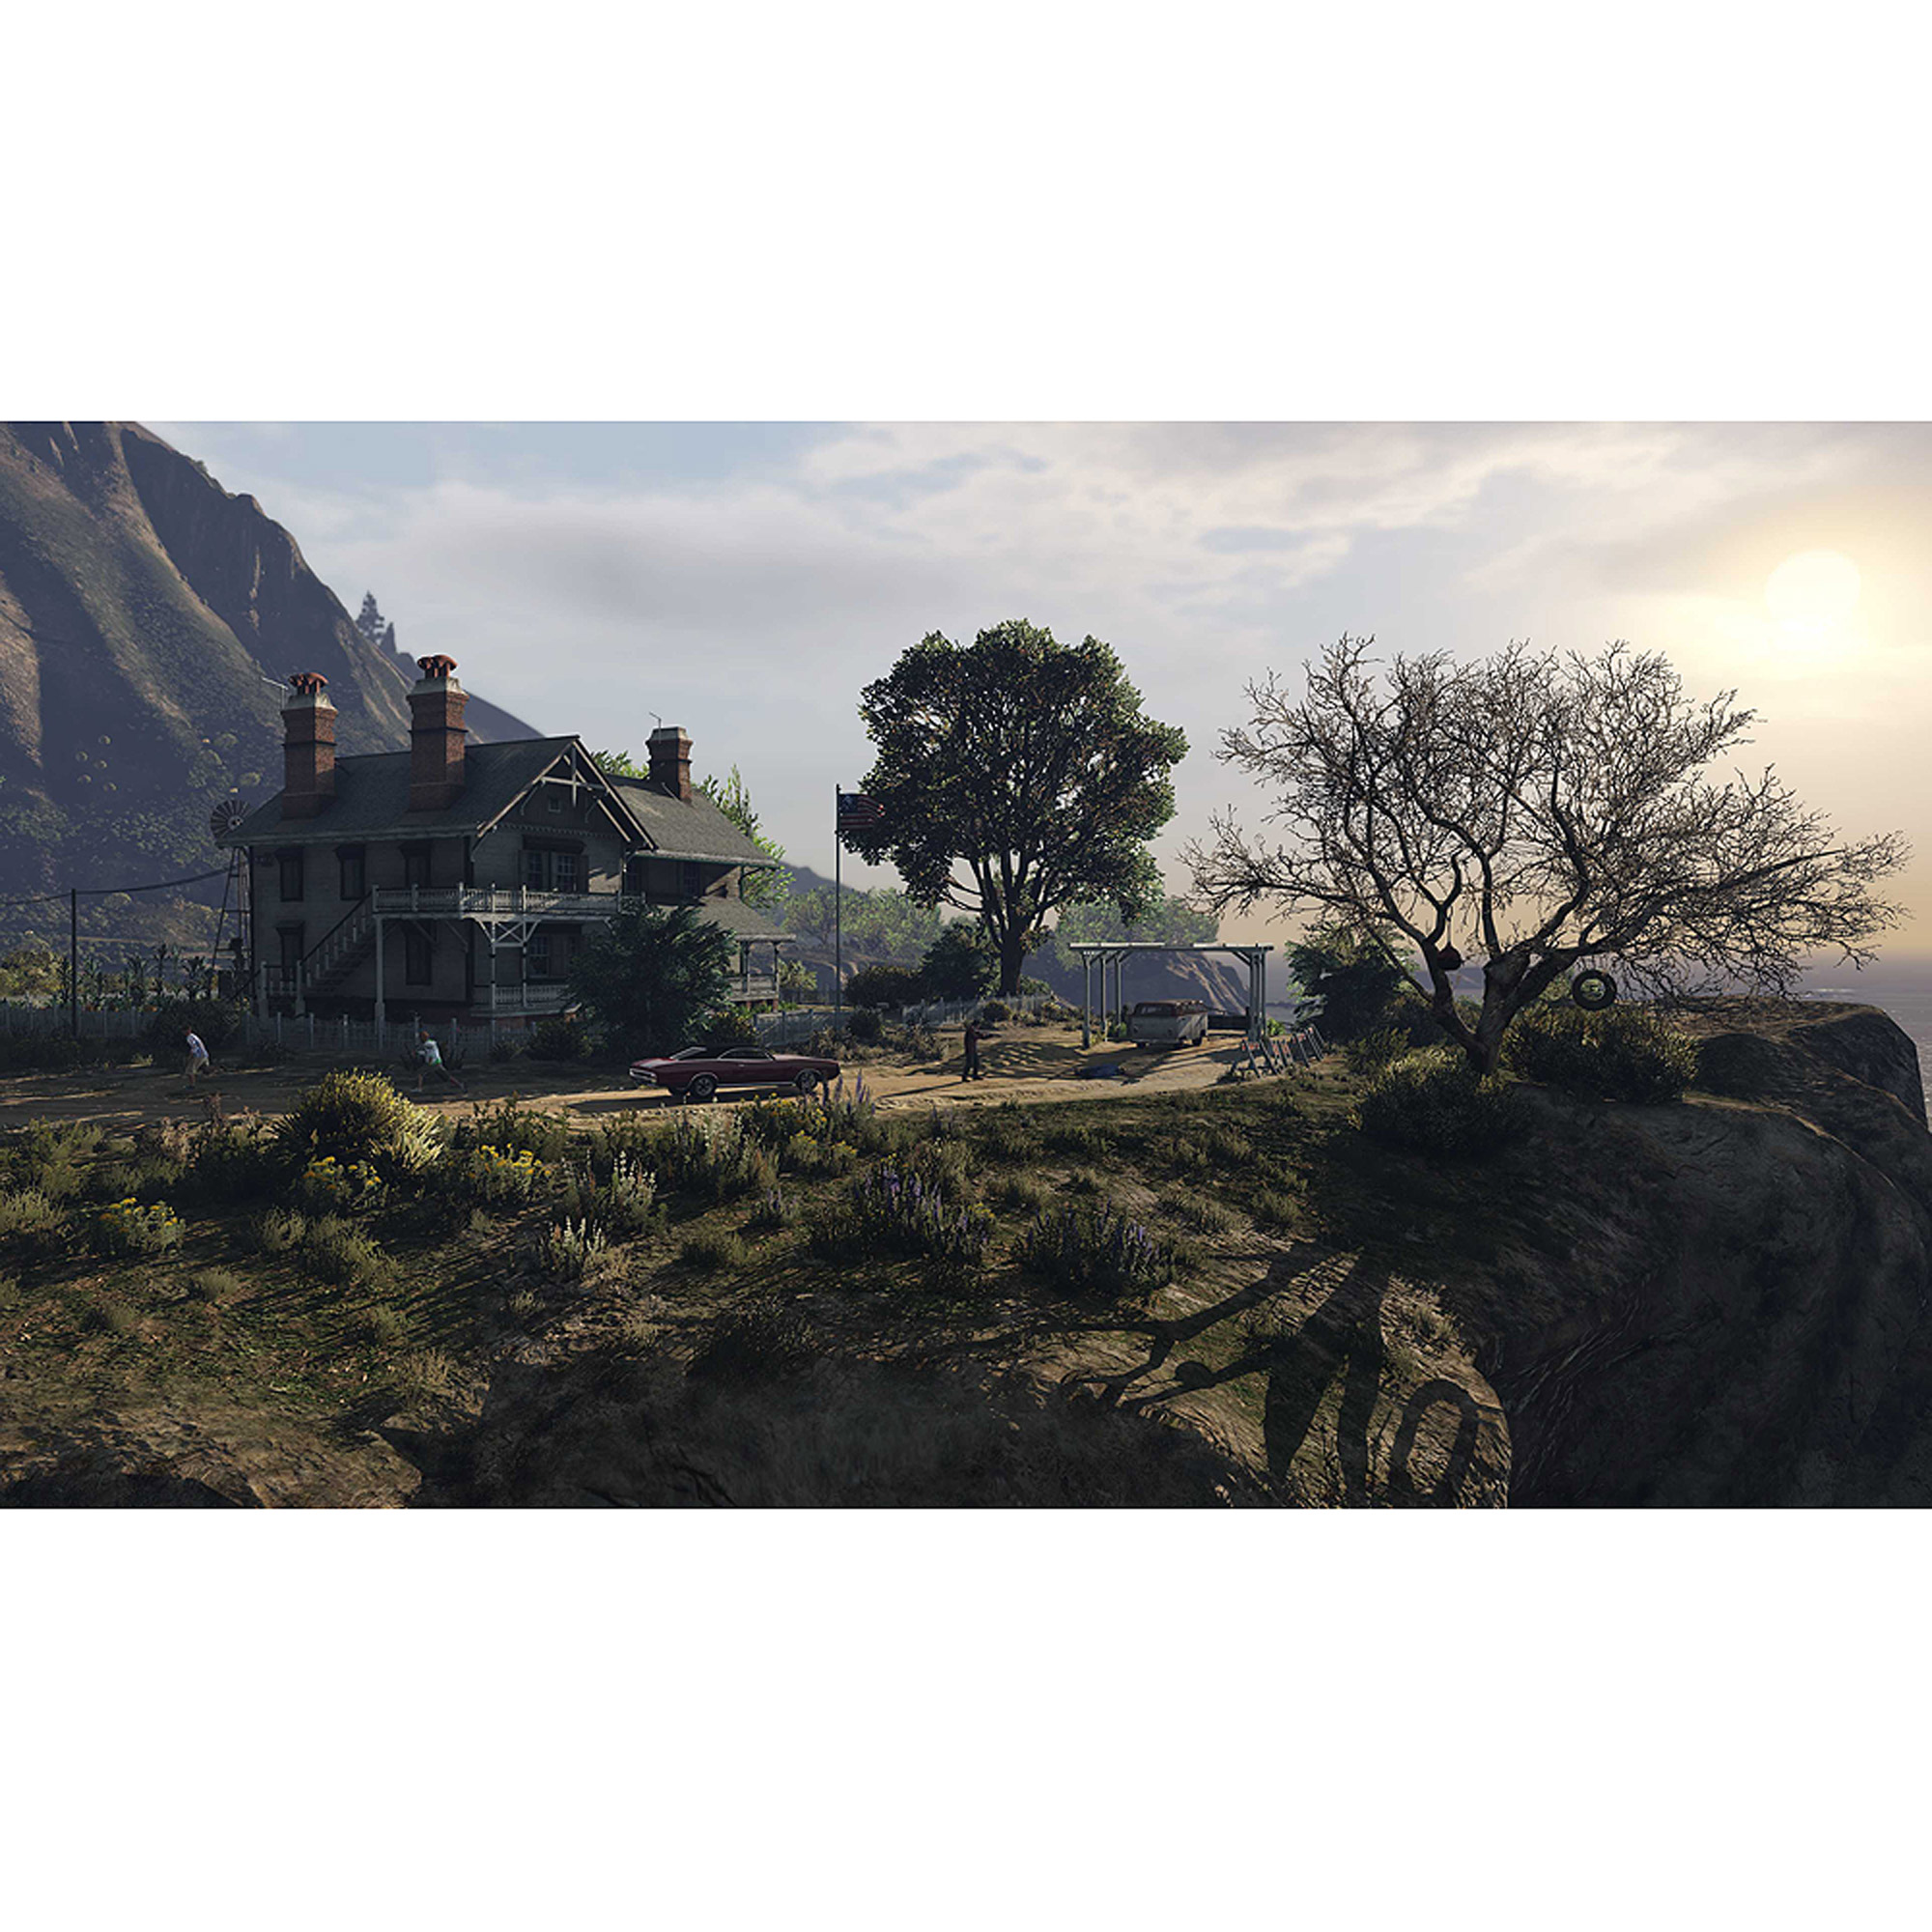 Grand Theft Auto V, Rockstar Games, PC - image 4 of 22